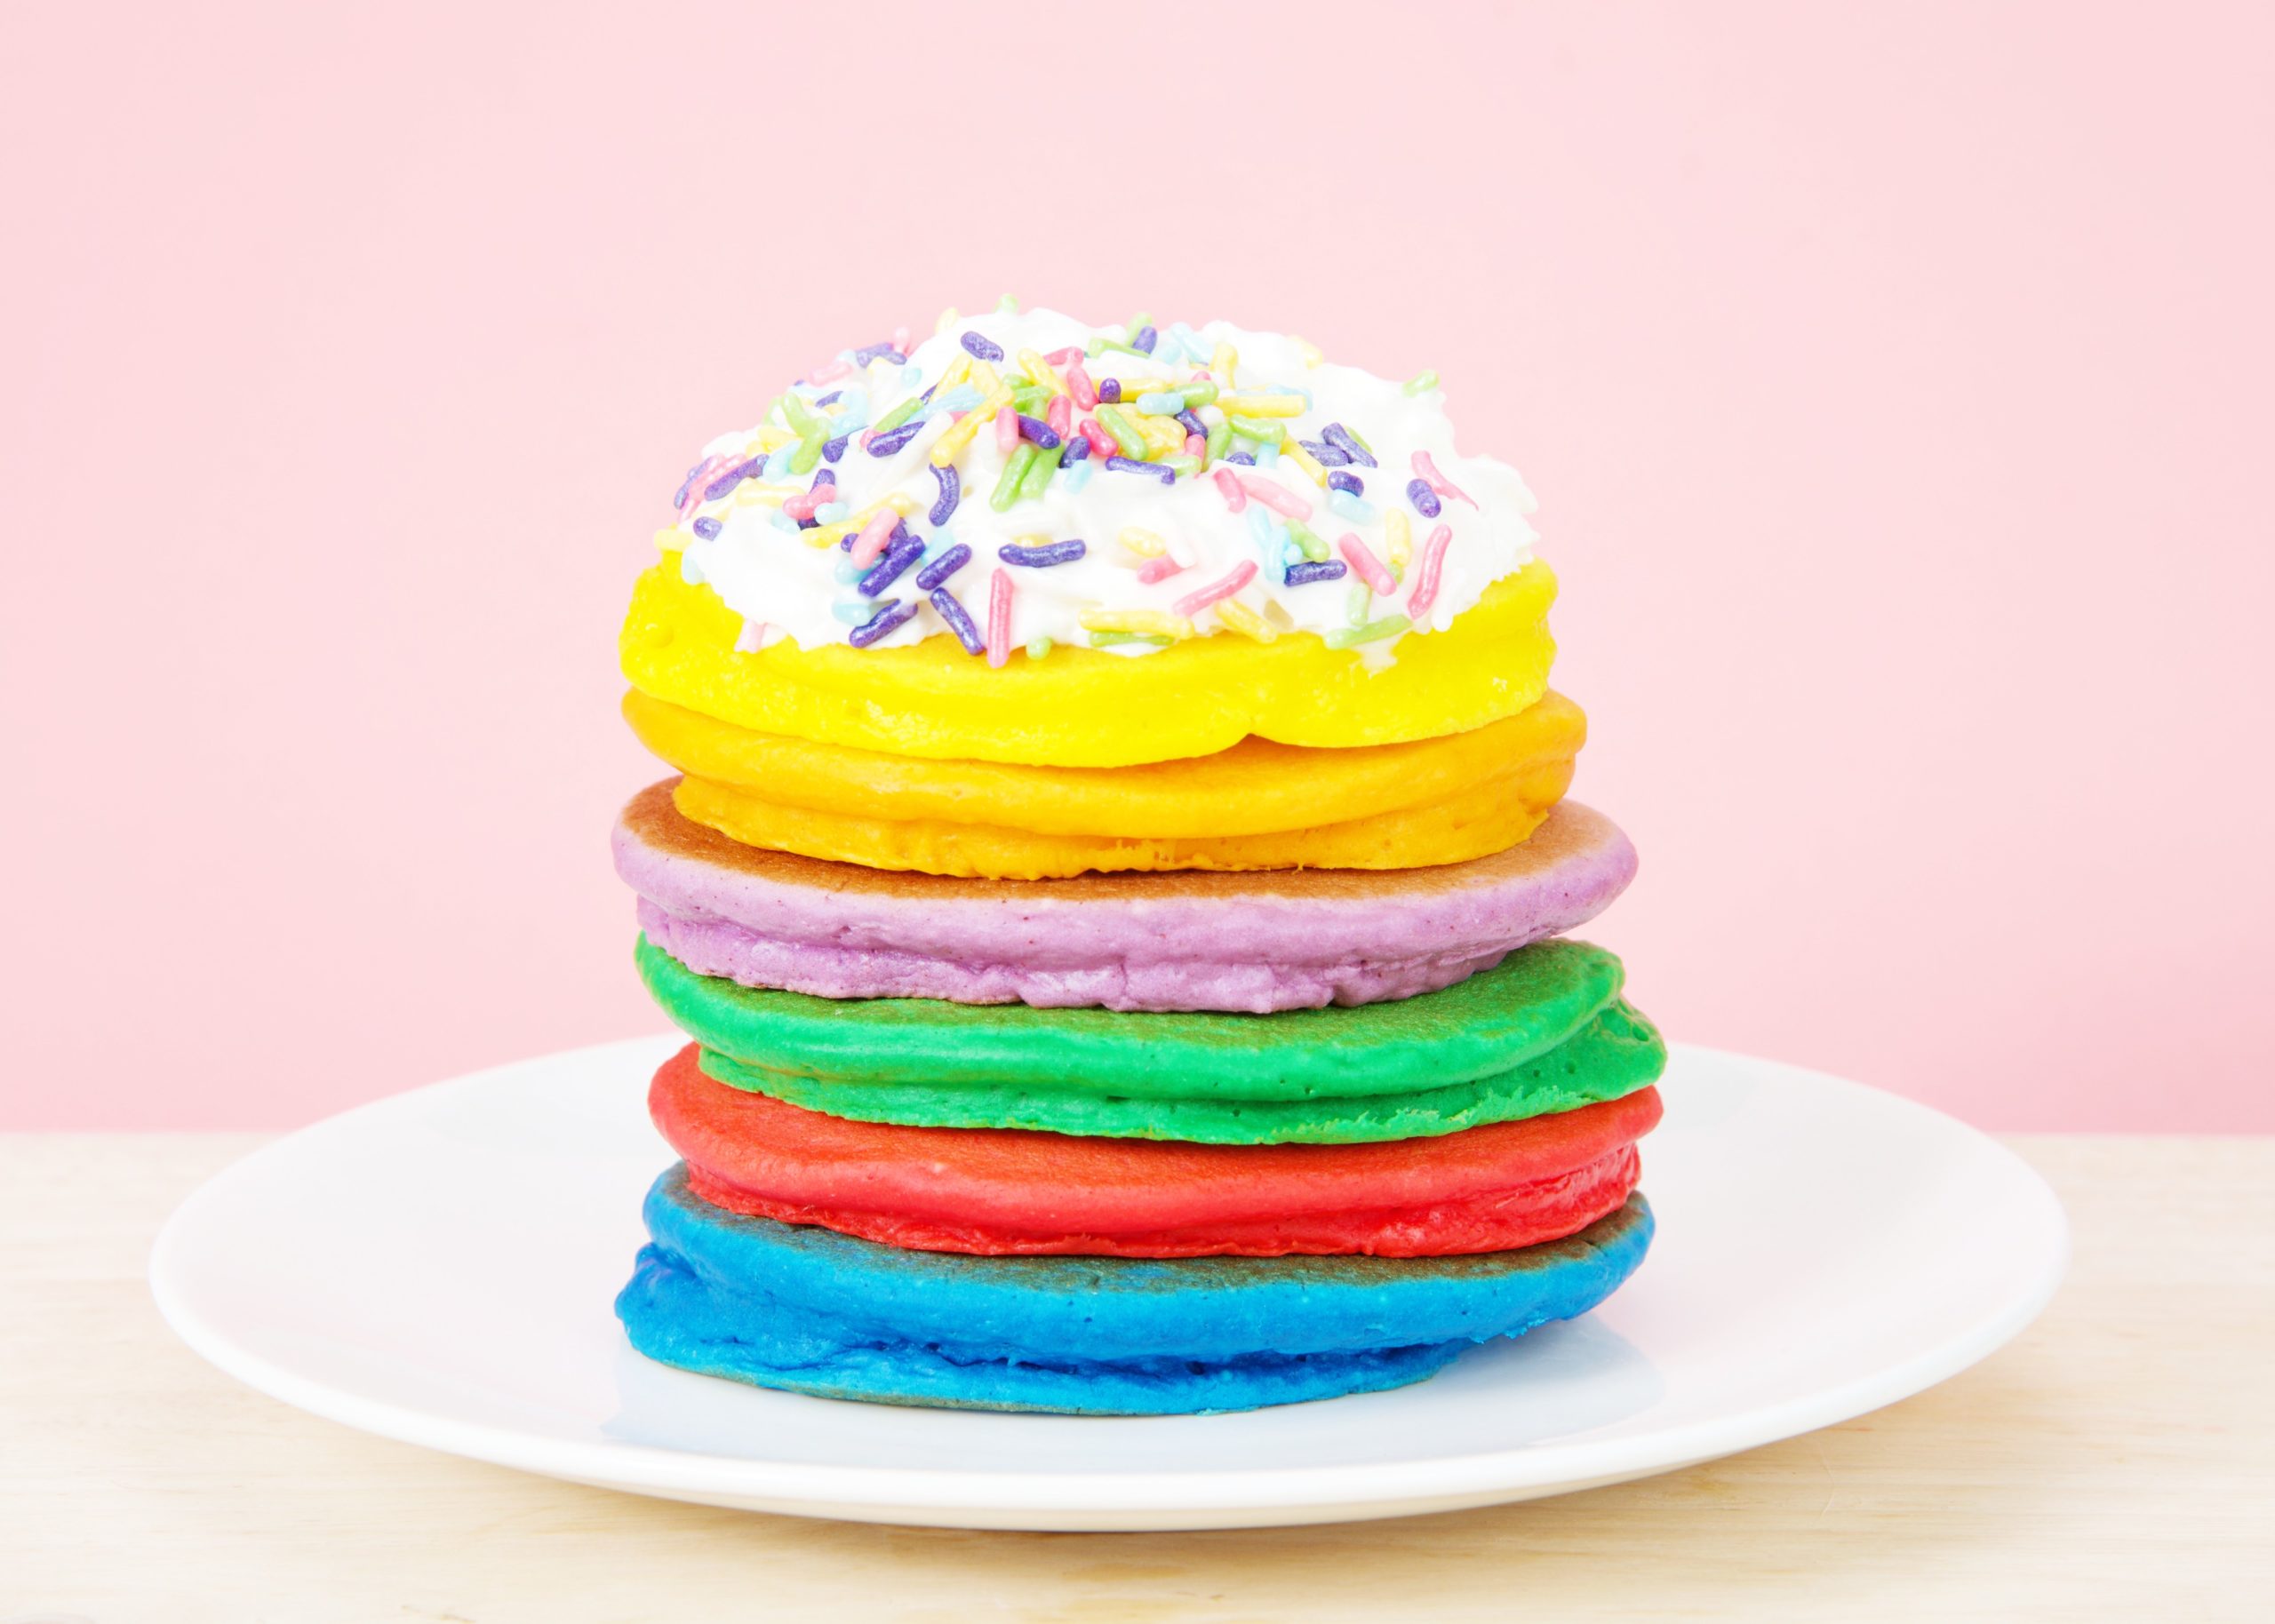 <img src="rainbow.jpg" alt="rainbow pancakes for valentine's day date ideas"/> 